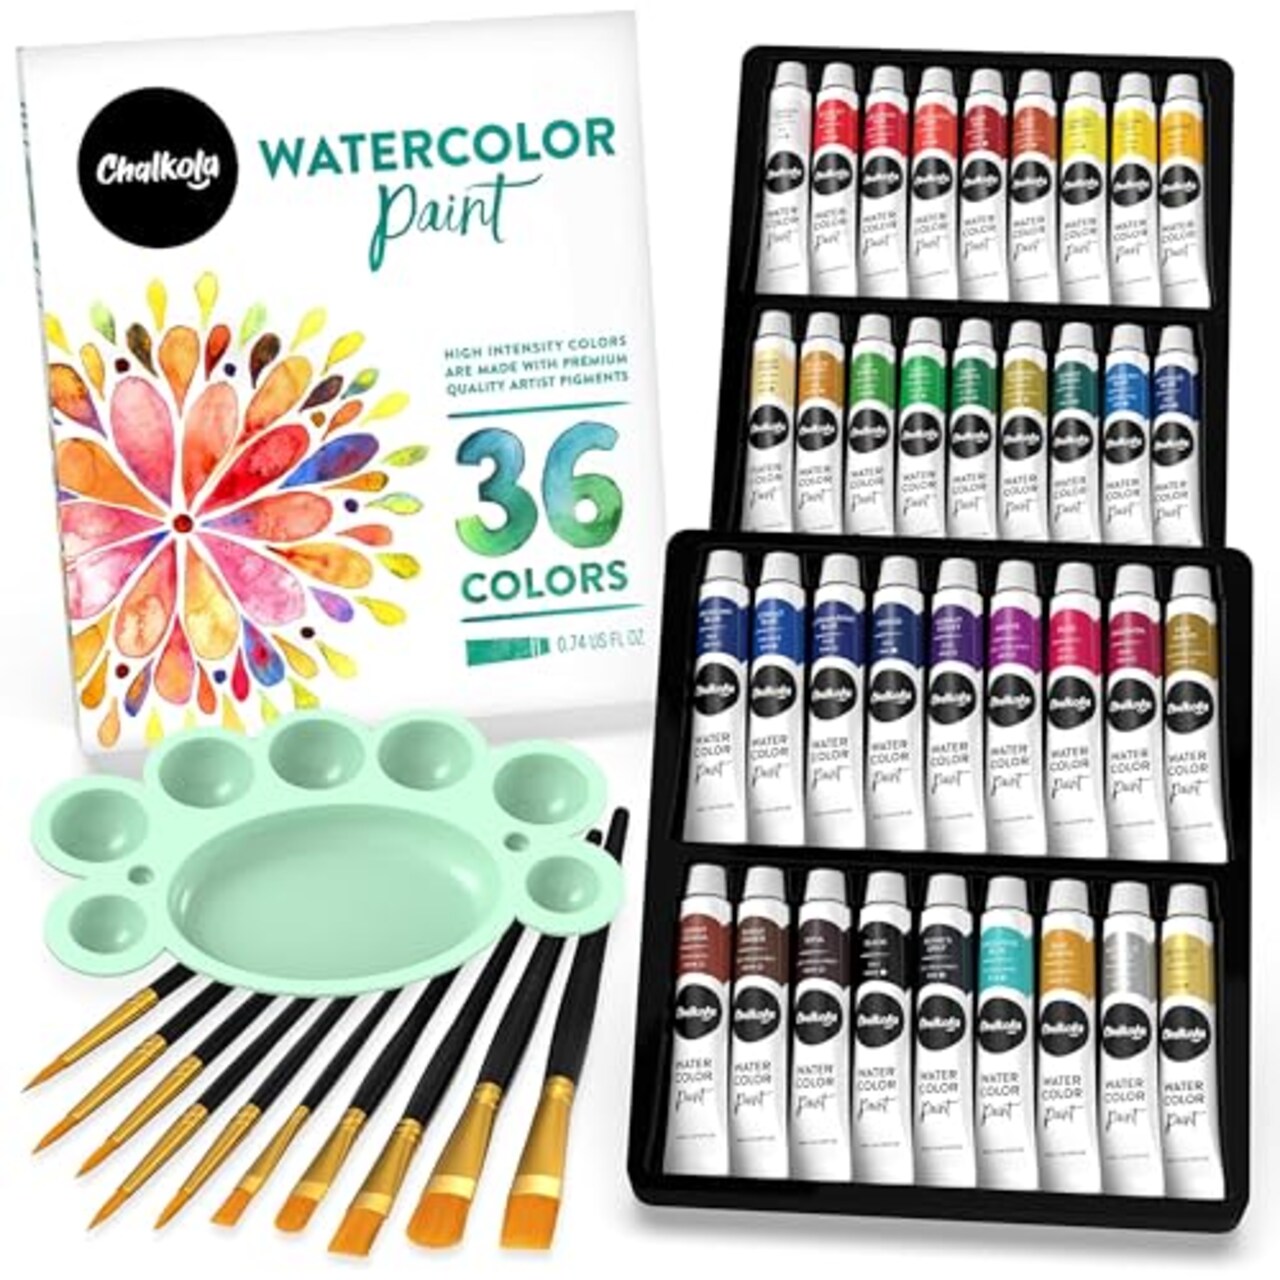 Chalkola Watercolor Paint Set for Adults, Kids, Beginner